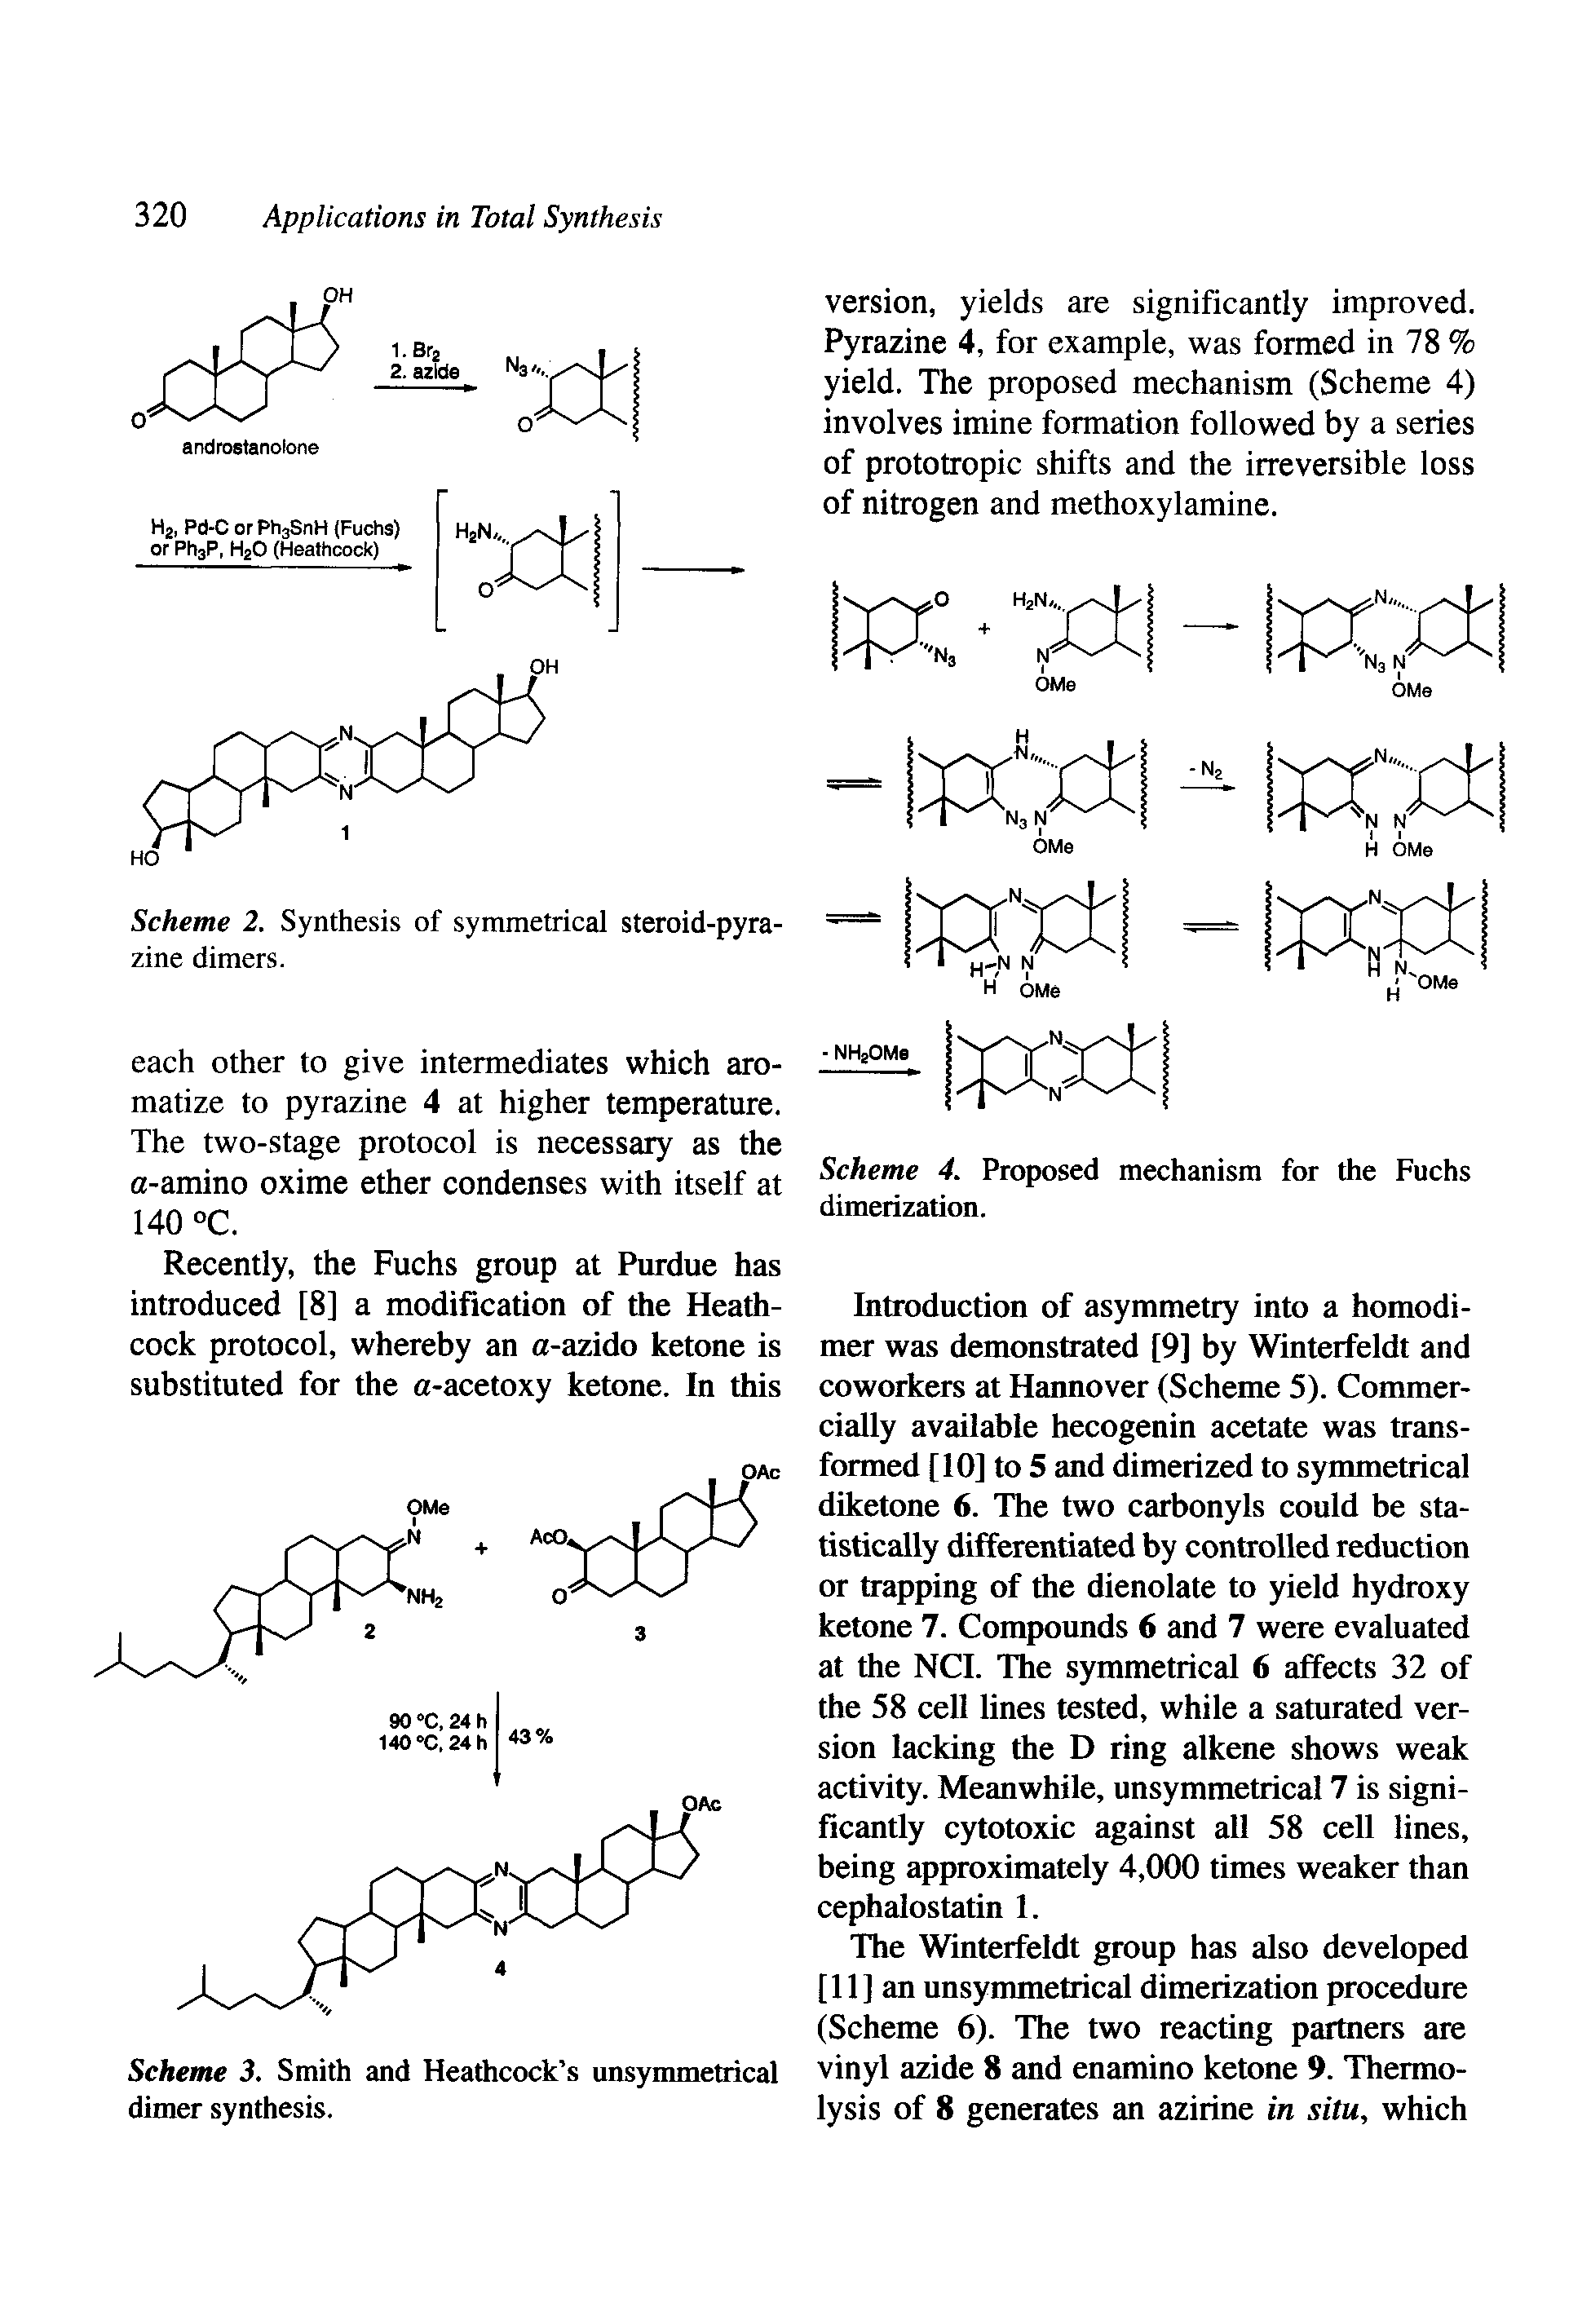 Scheme 3. Smith and Heathcock s unsymmettical dimer synthesis.